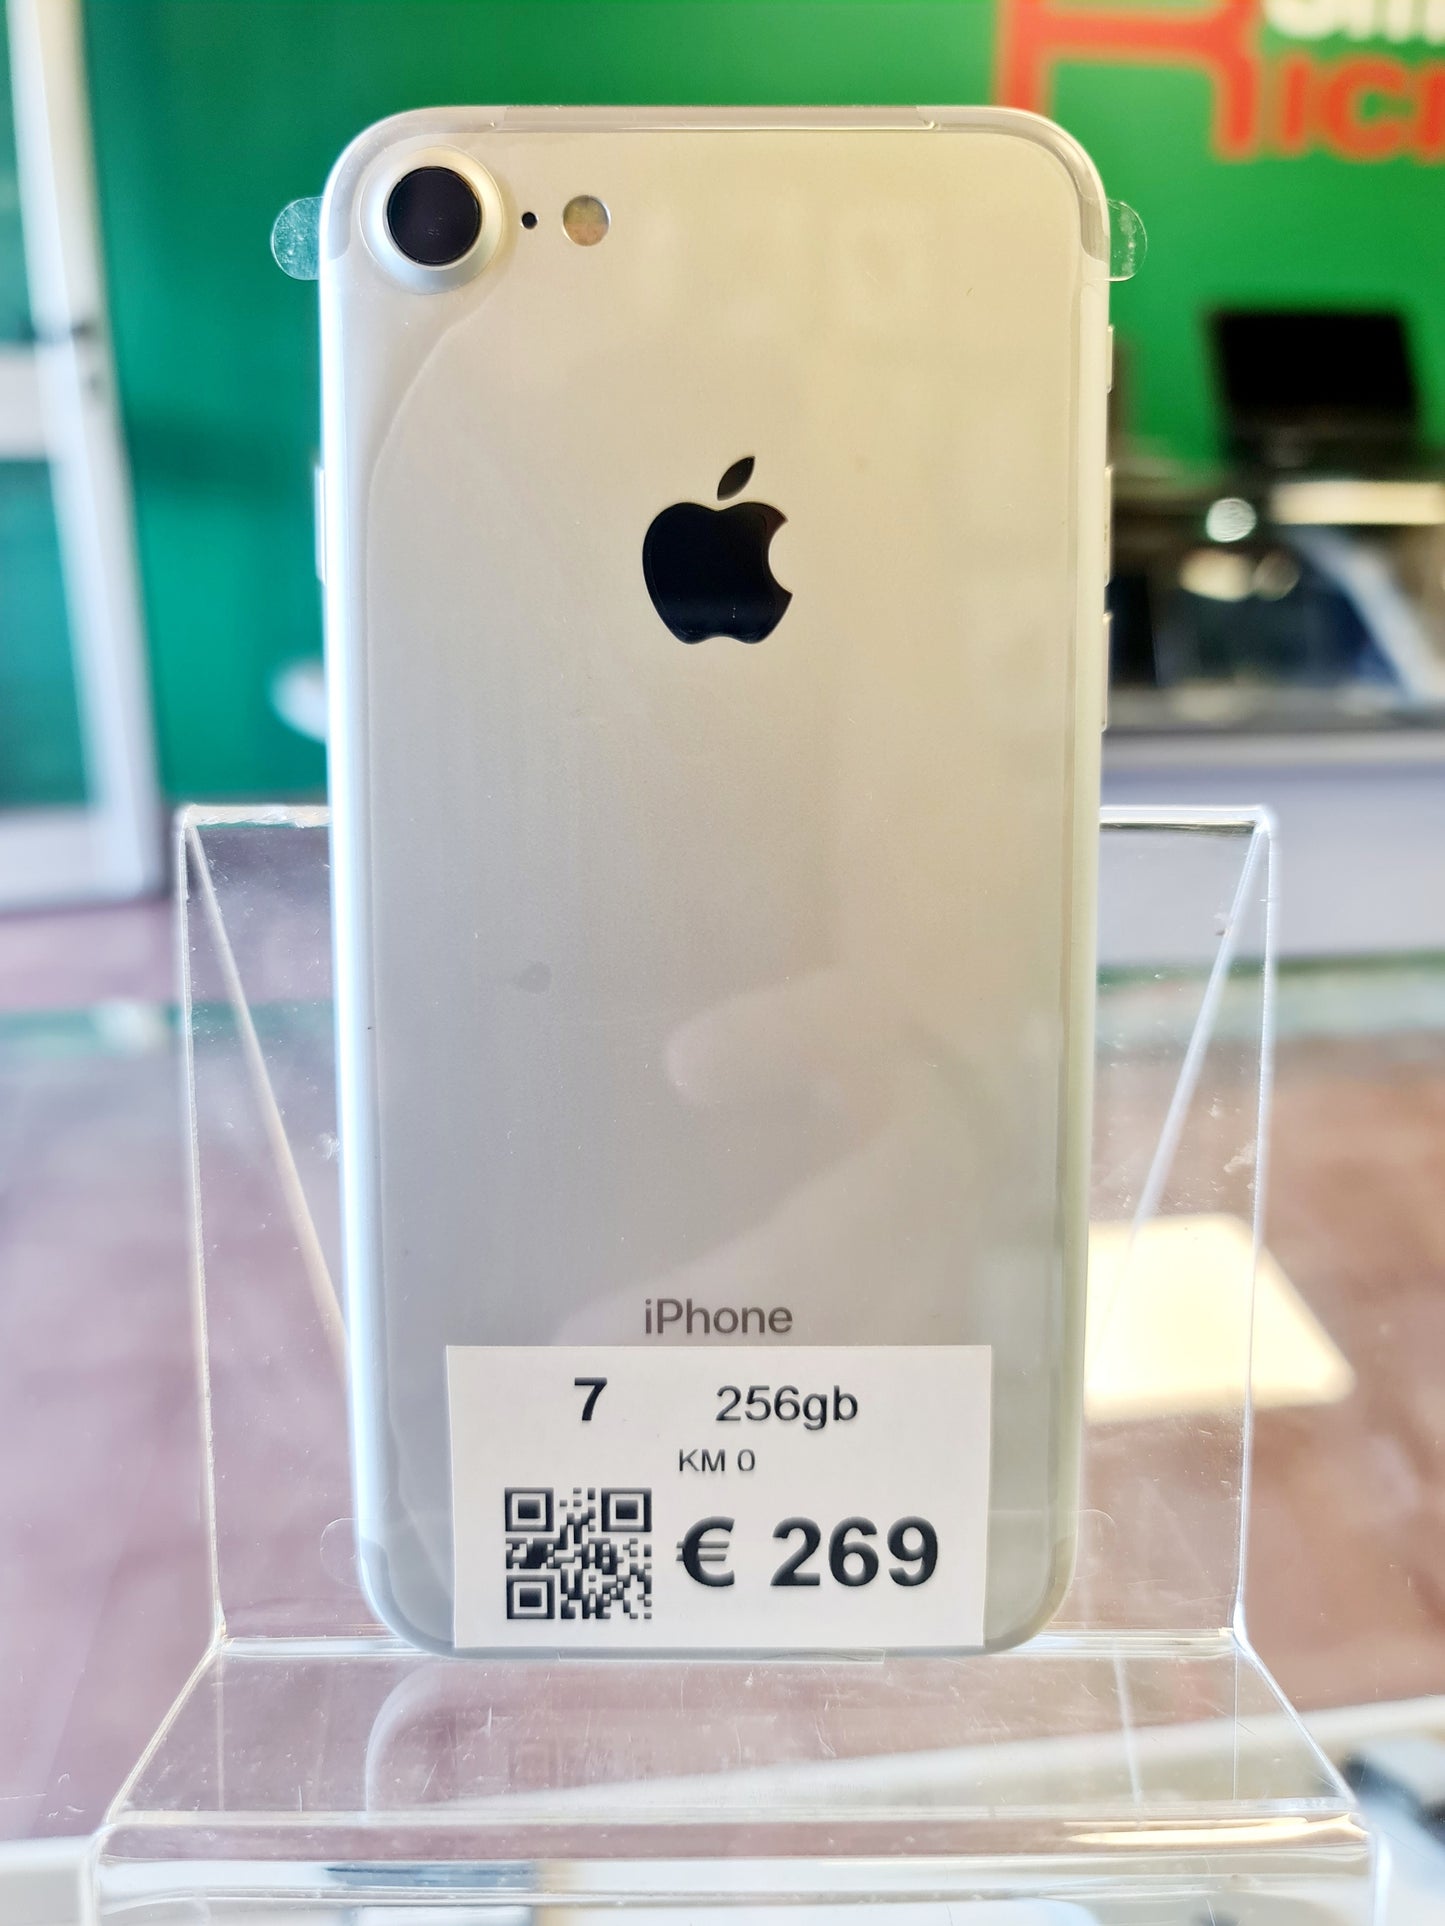 Apple iPhone 7 - 256gb - argento - km 0